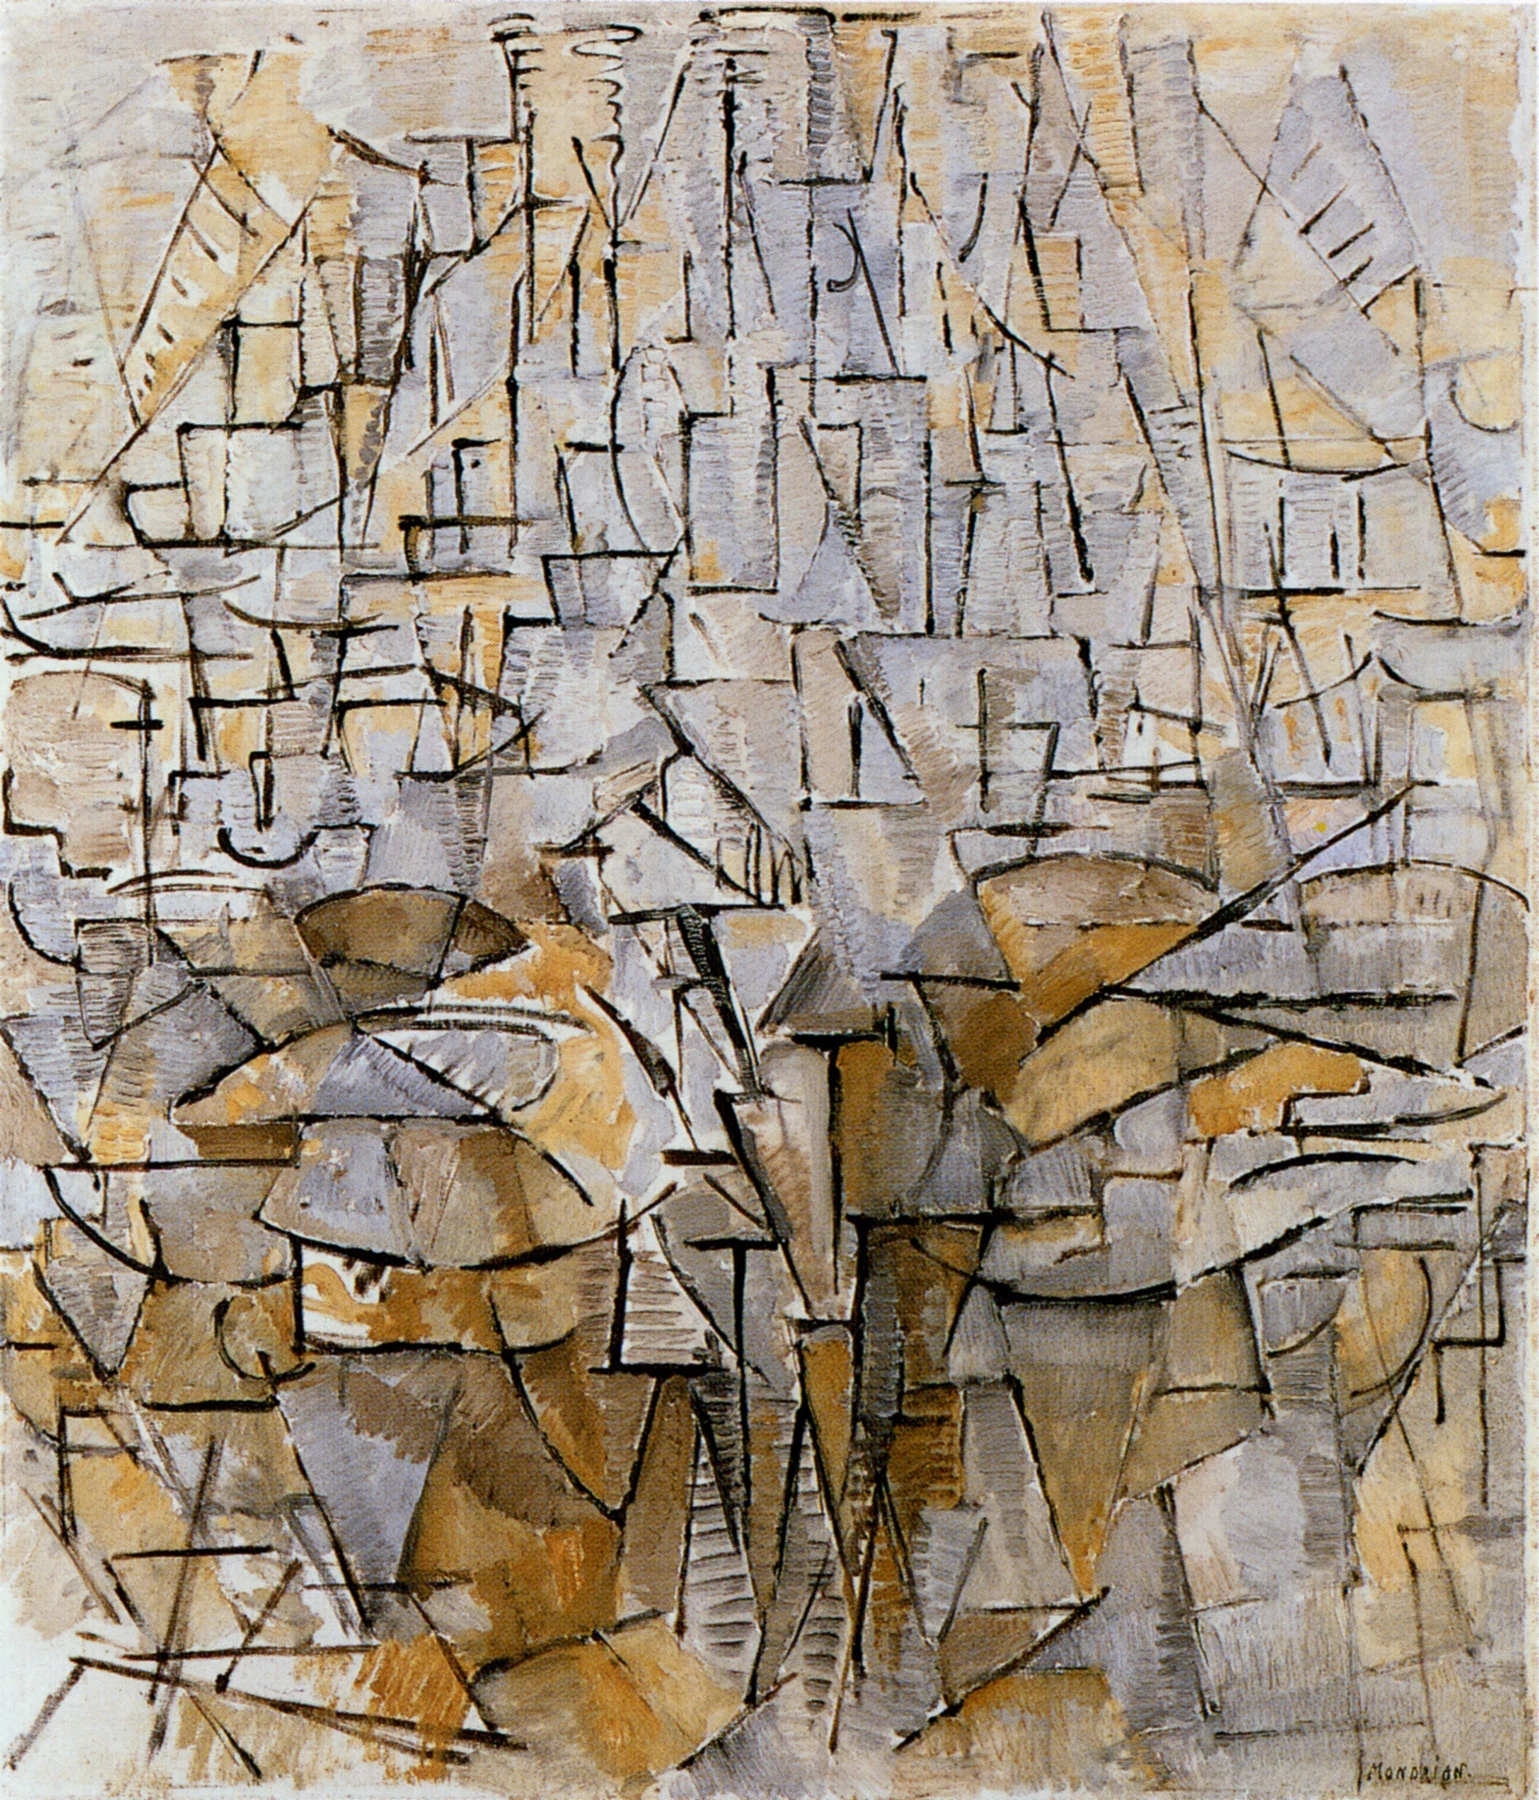 Composition No. 3, Piet Mondrian